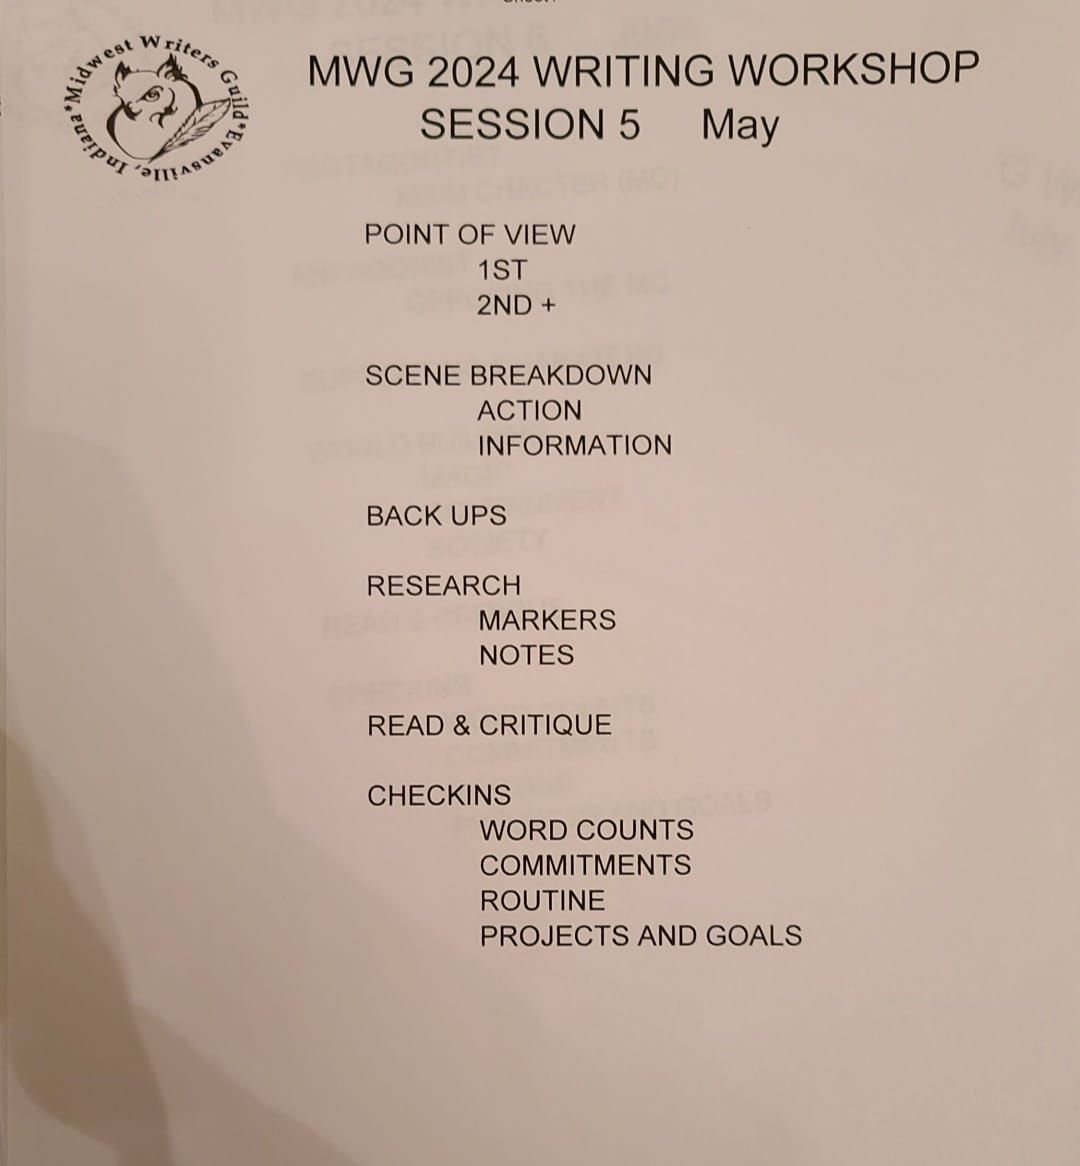 MWG Writing workshop session 5